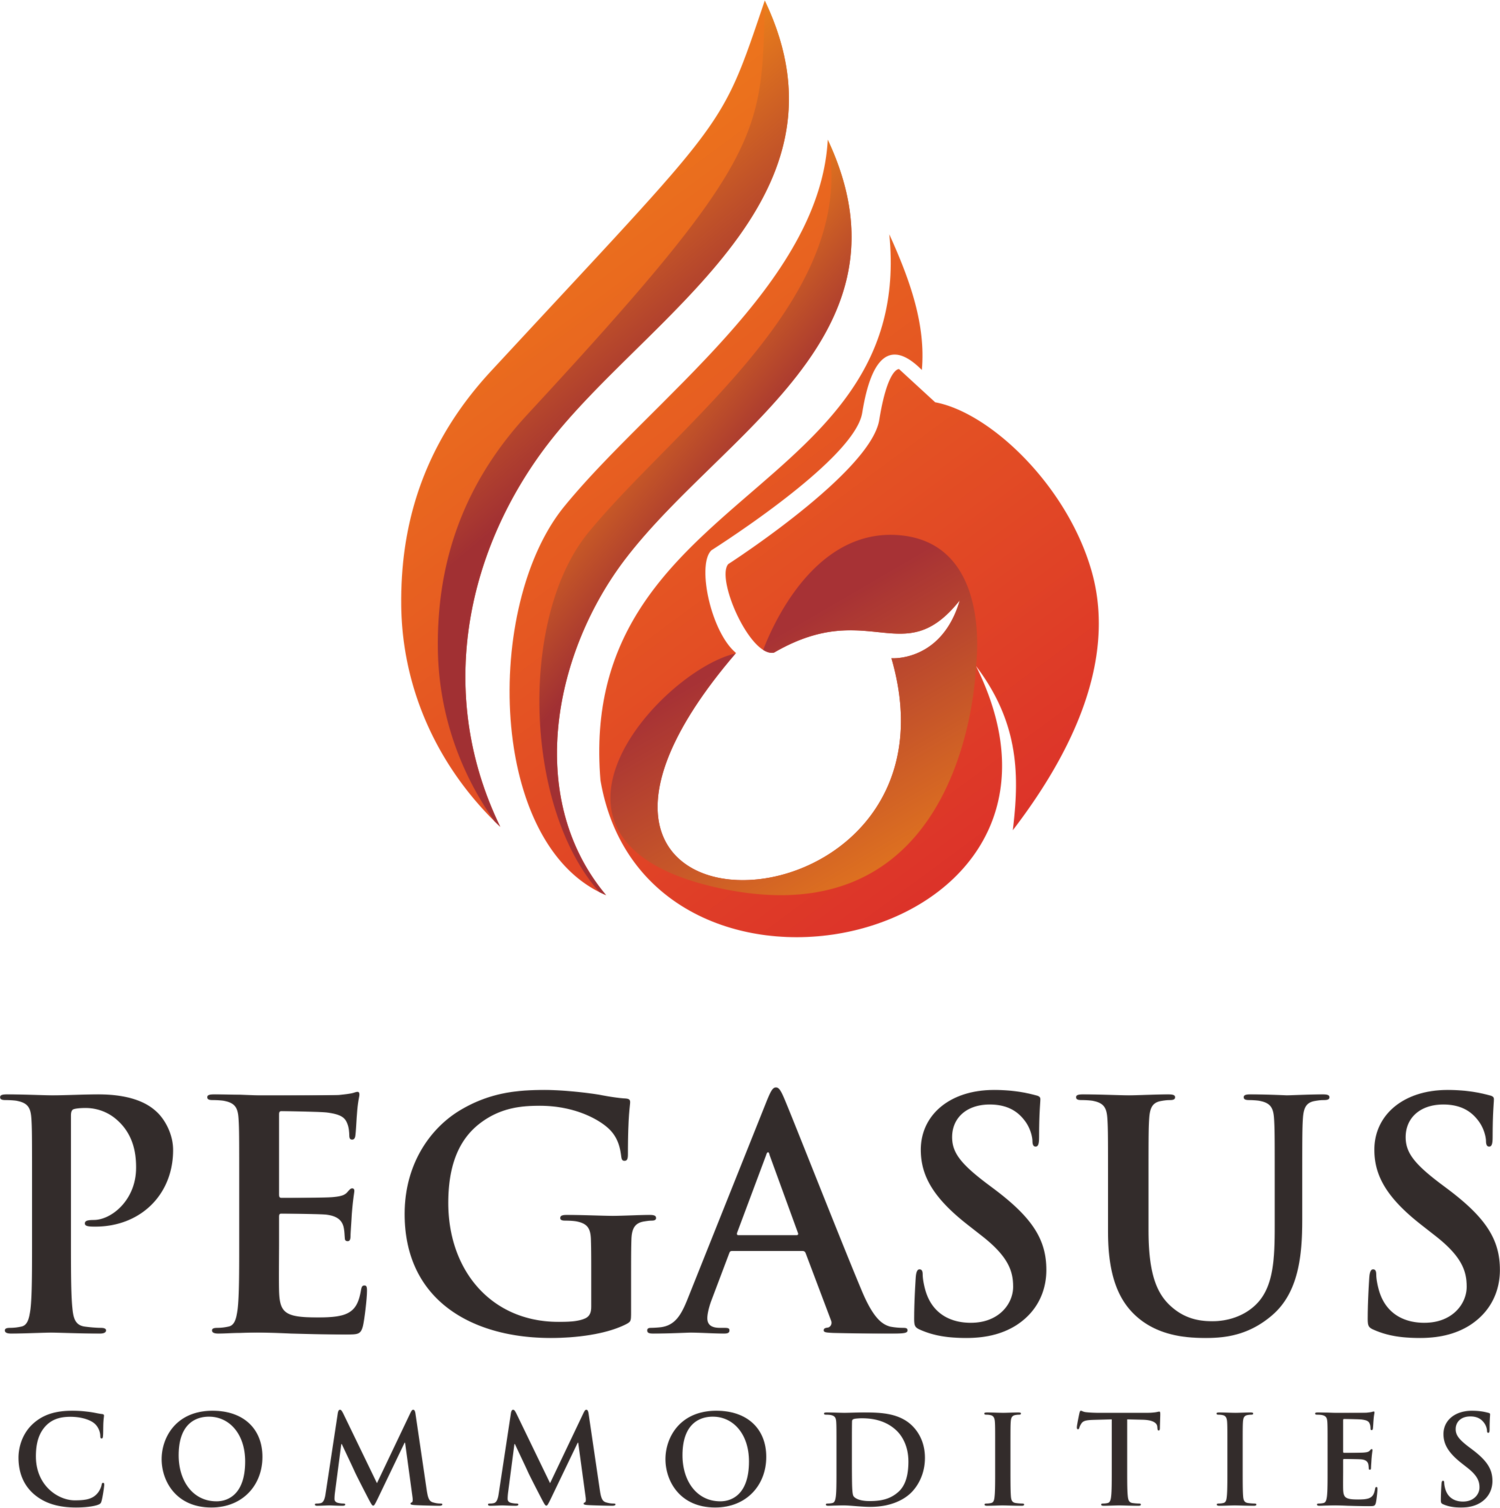 Pegasus Commodities